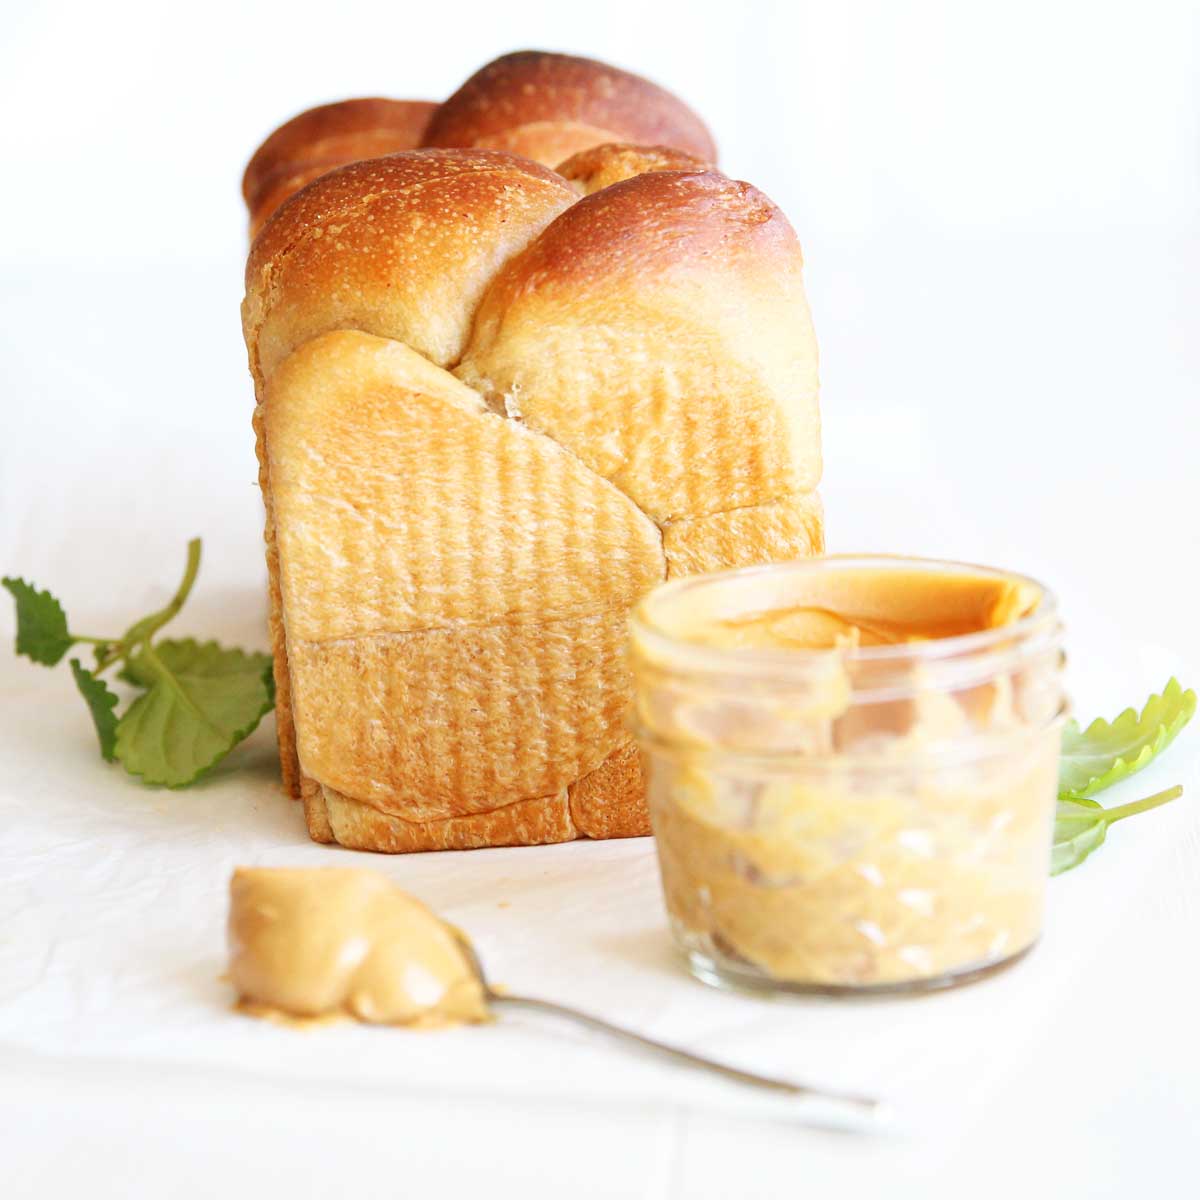 Peanut Butter Yeast Bread (A Healthier Vegan "Brioche" Recipe) - PB Fit Nice Cream